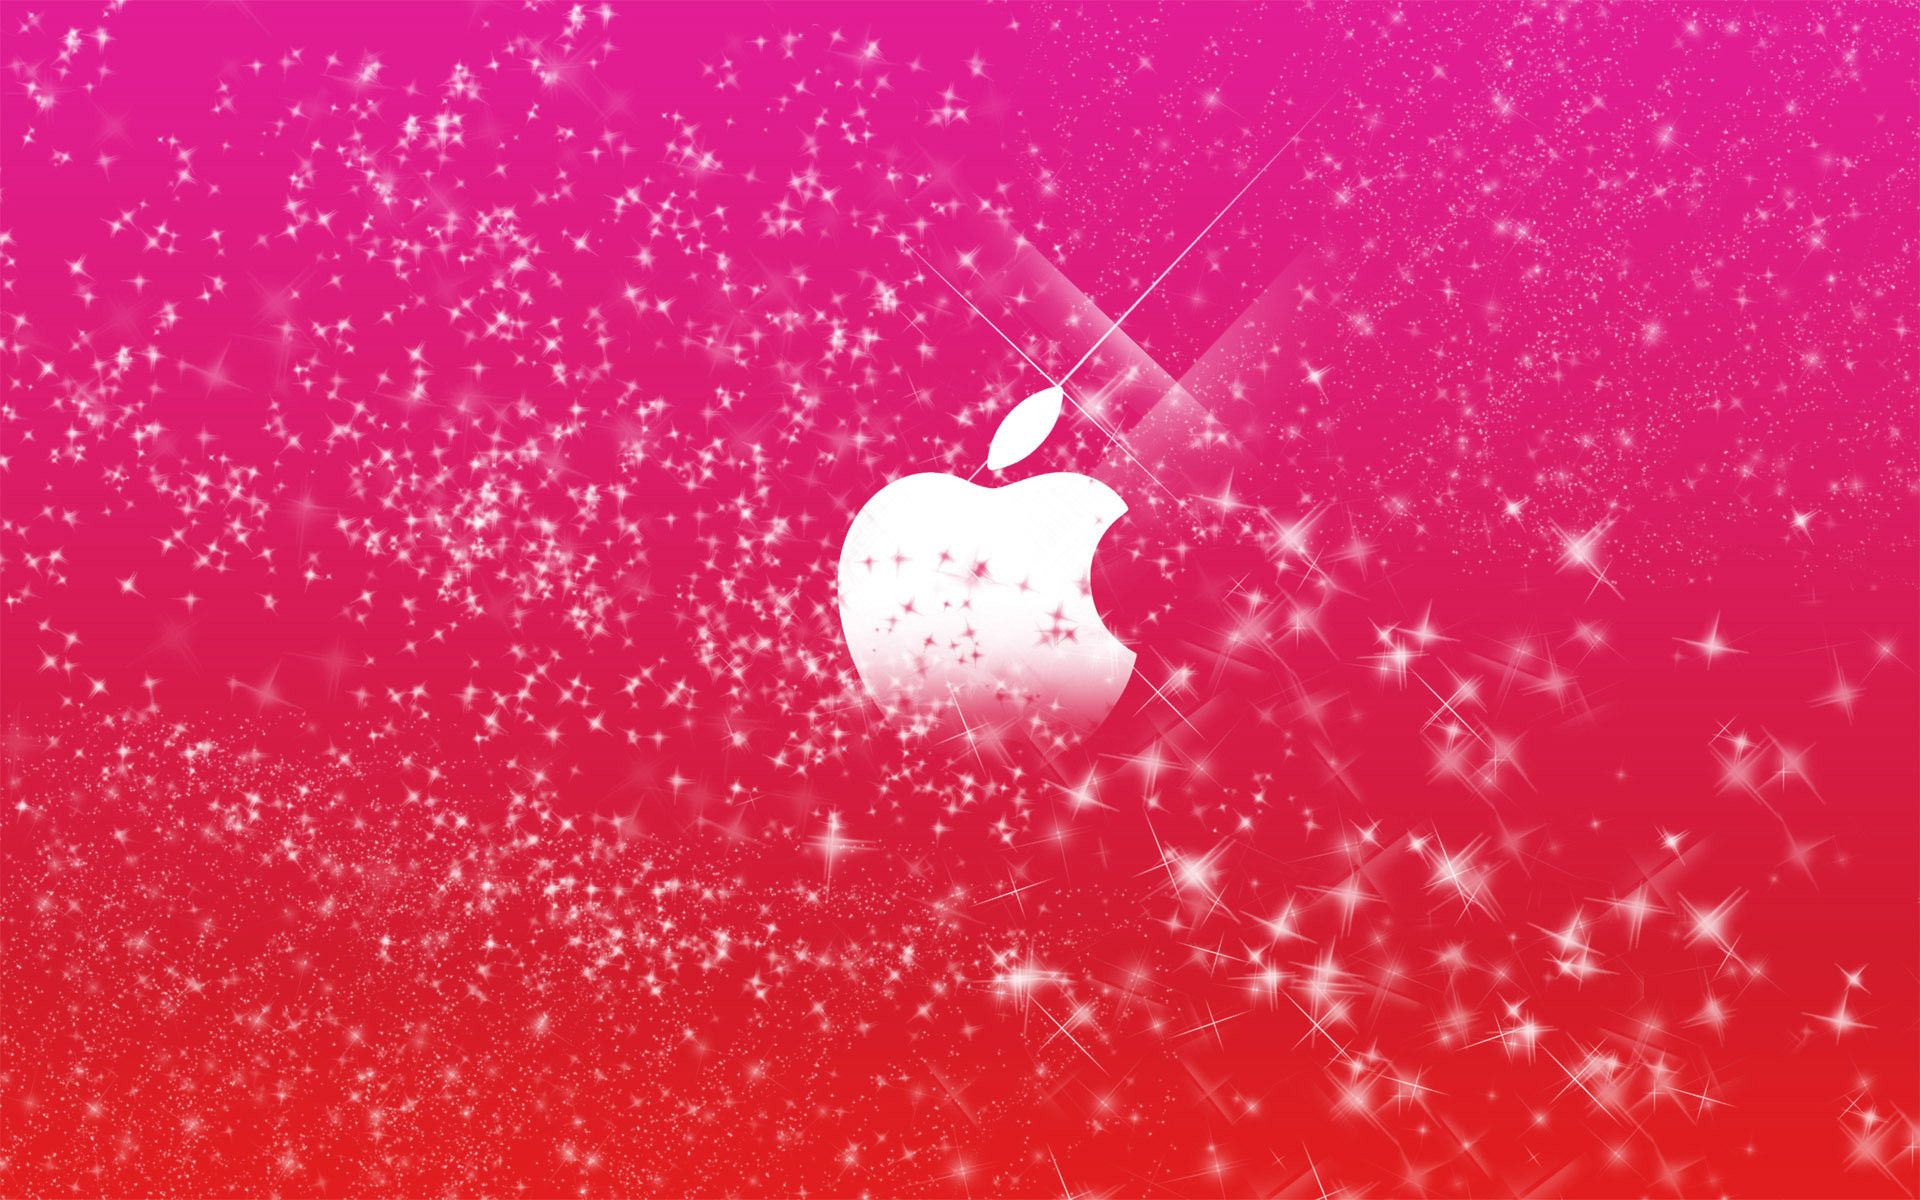 Pink Computer Background